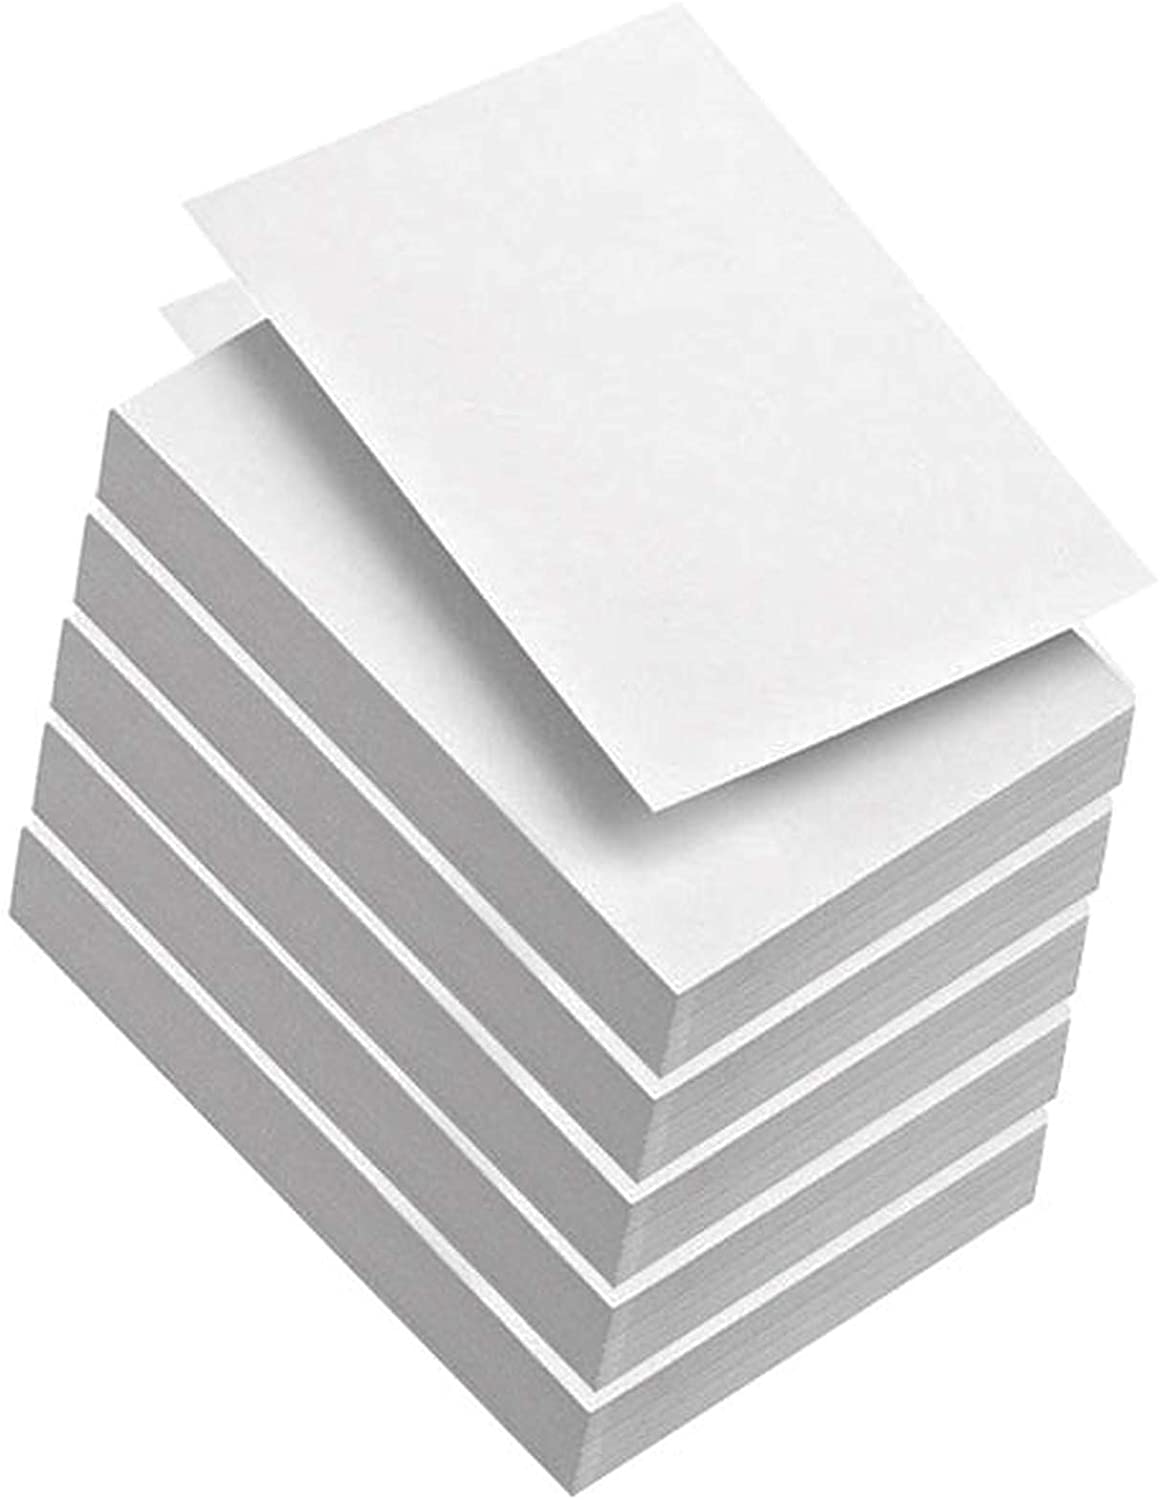 Folios A4. 1 Paquete 500 folios. DIN A4 y 1 Paquete de 500 folios din A4  75gr, Papel impresora A4, Hogar